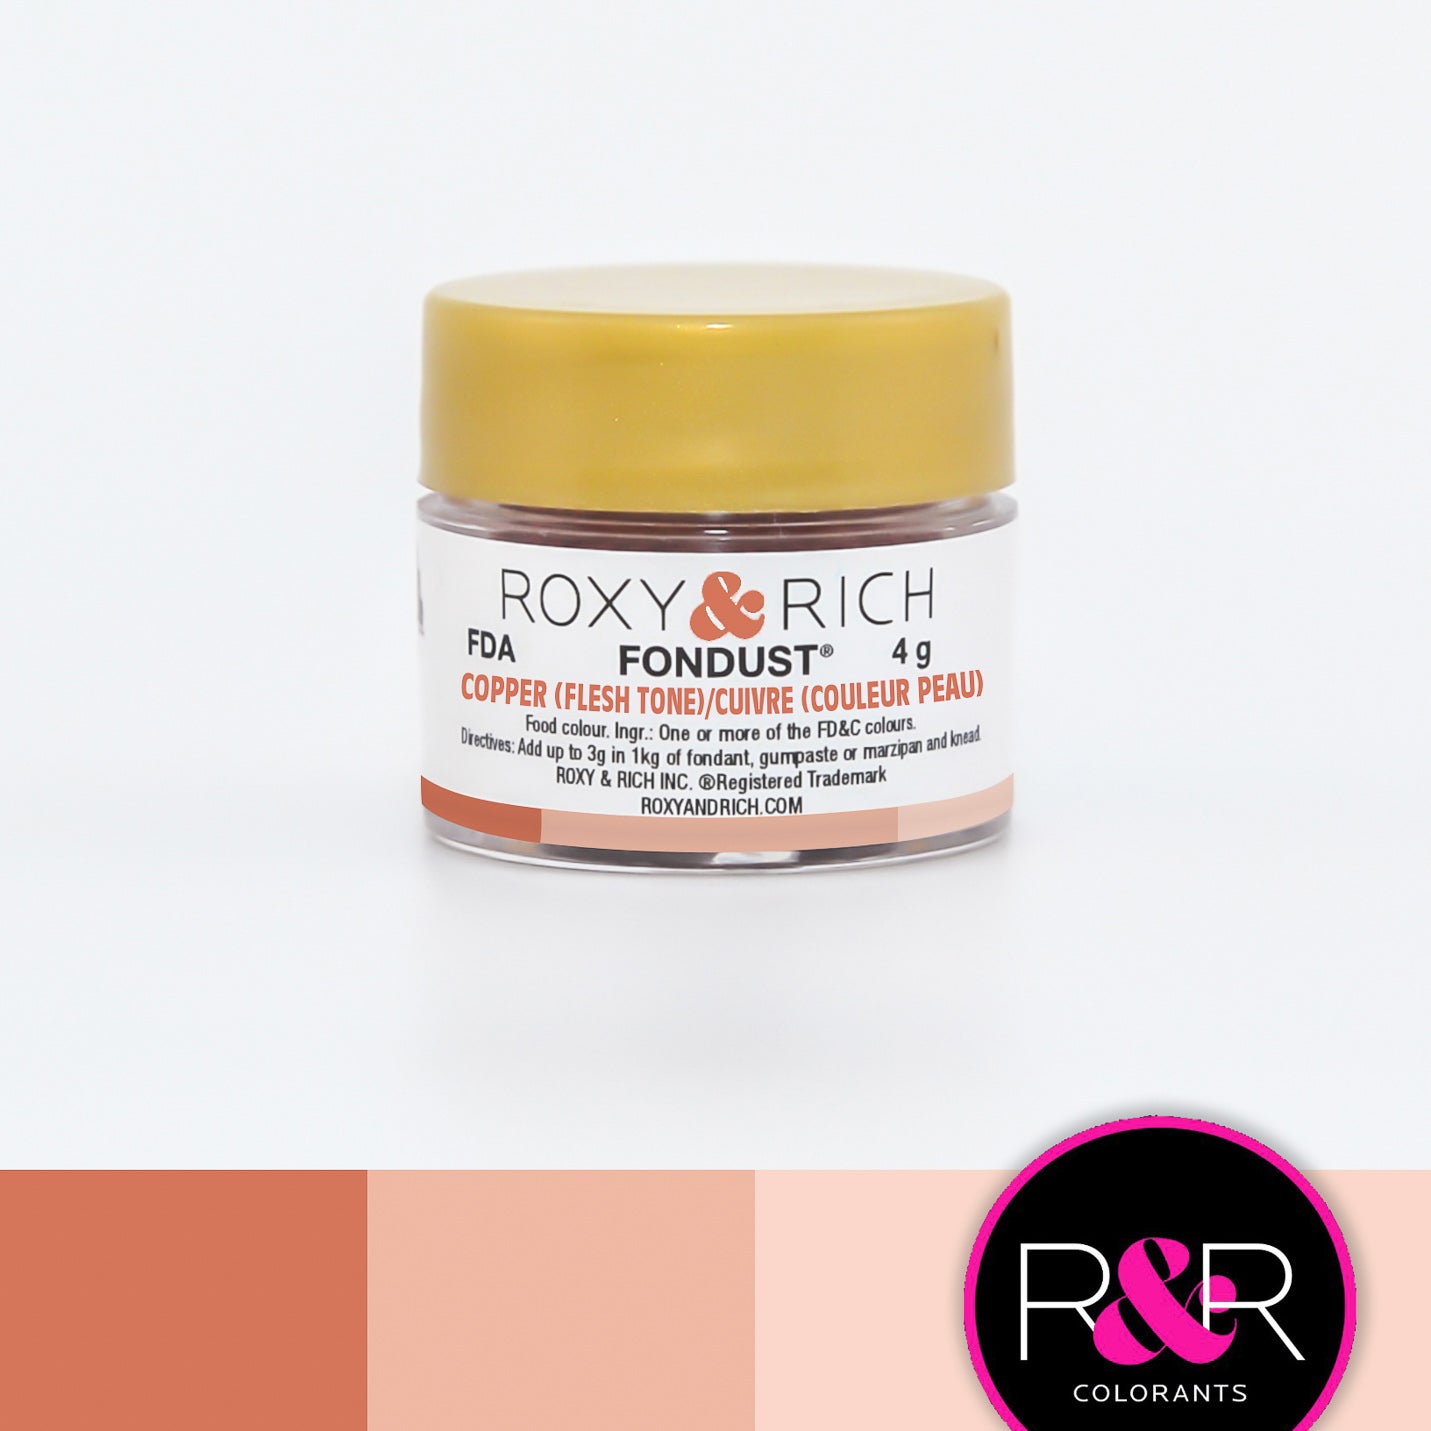 Colorant FONDUST Cuivre (couleur peau) 4g   - Roxy & Rich - Colorant alimentaire hydrosoluble - F4-033